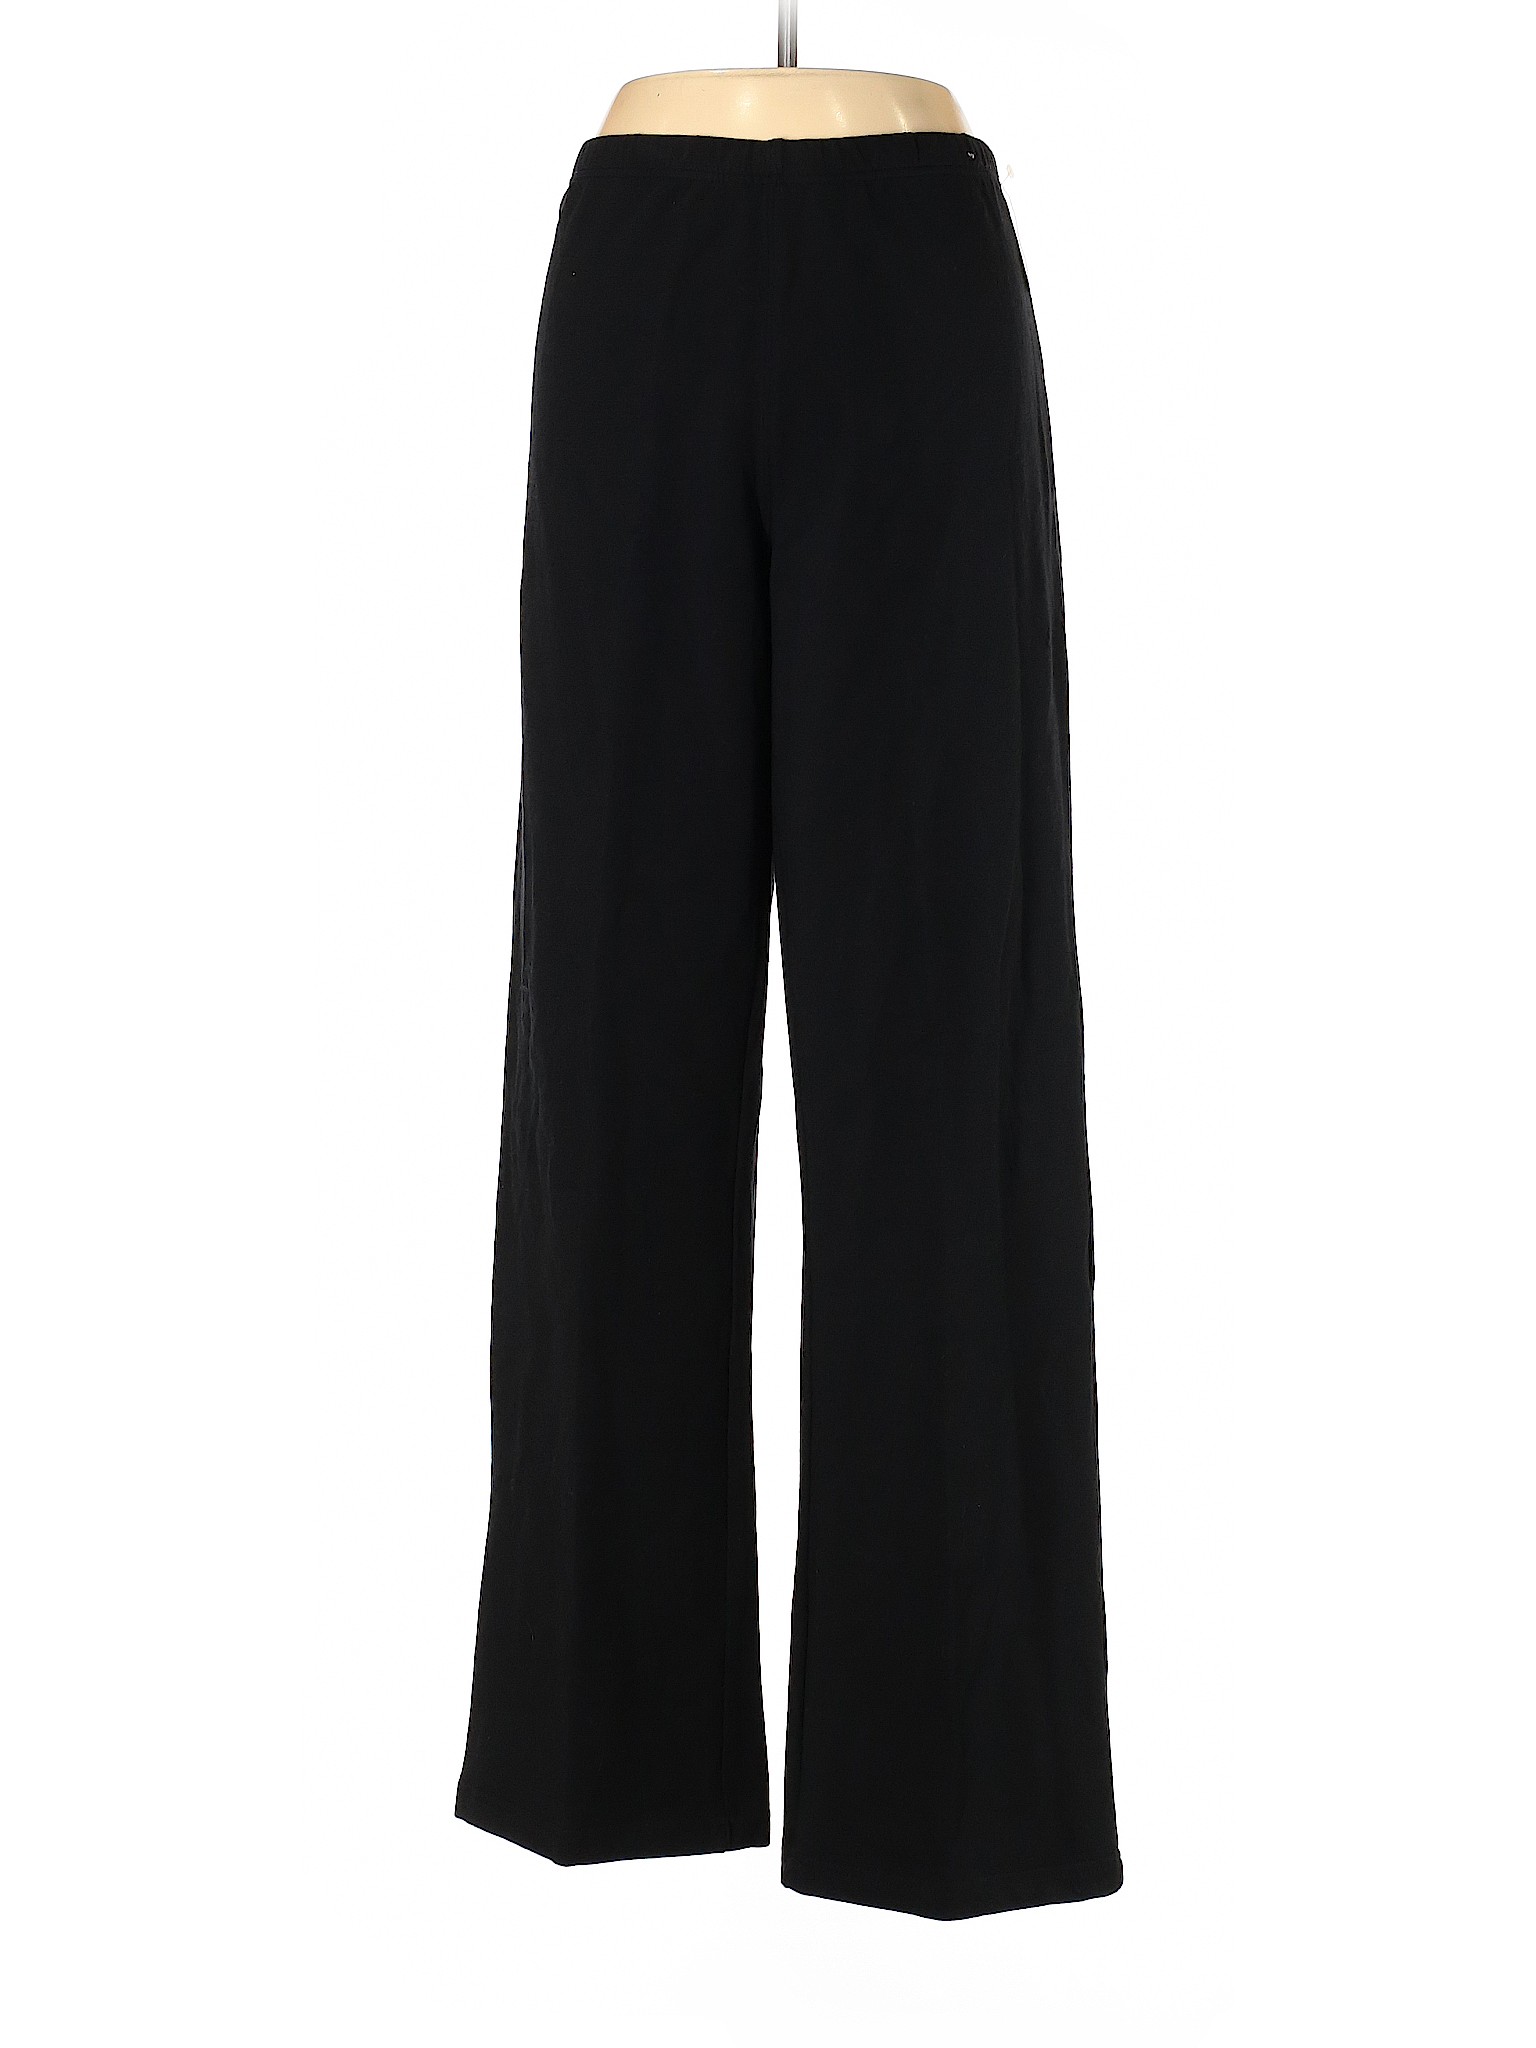 NWT Draper's & Damon's Women Black Casual Pants M | eBay